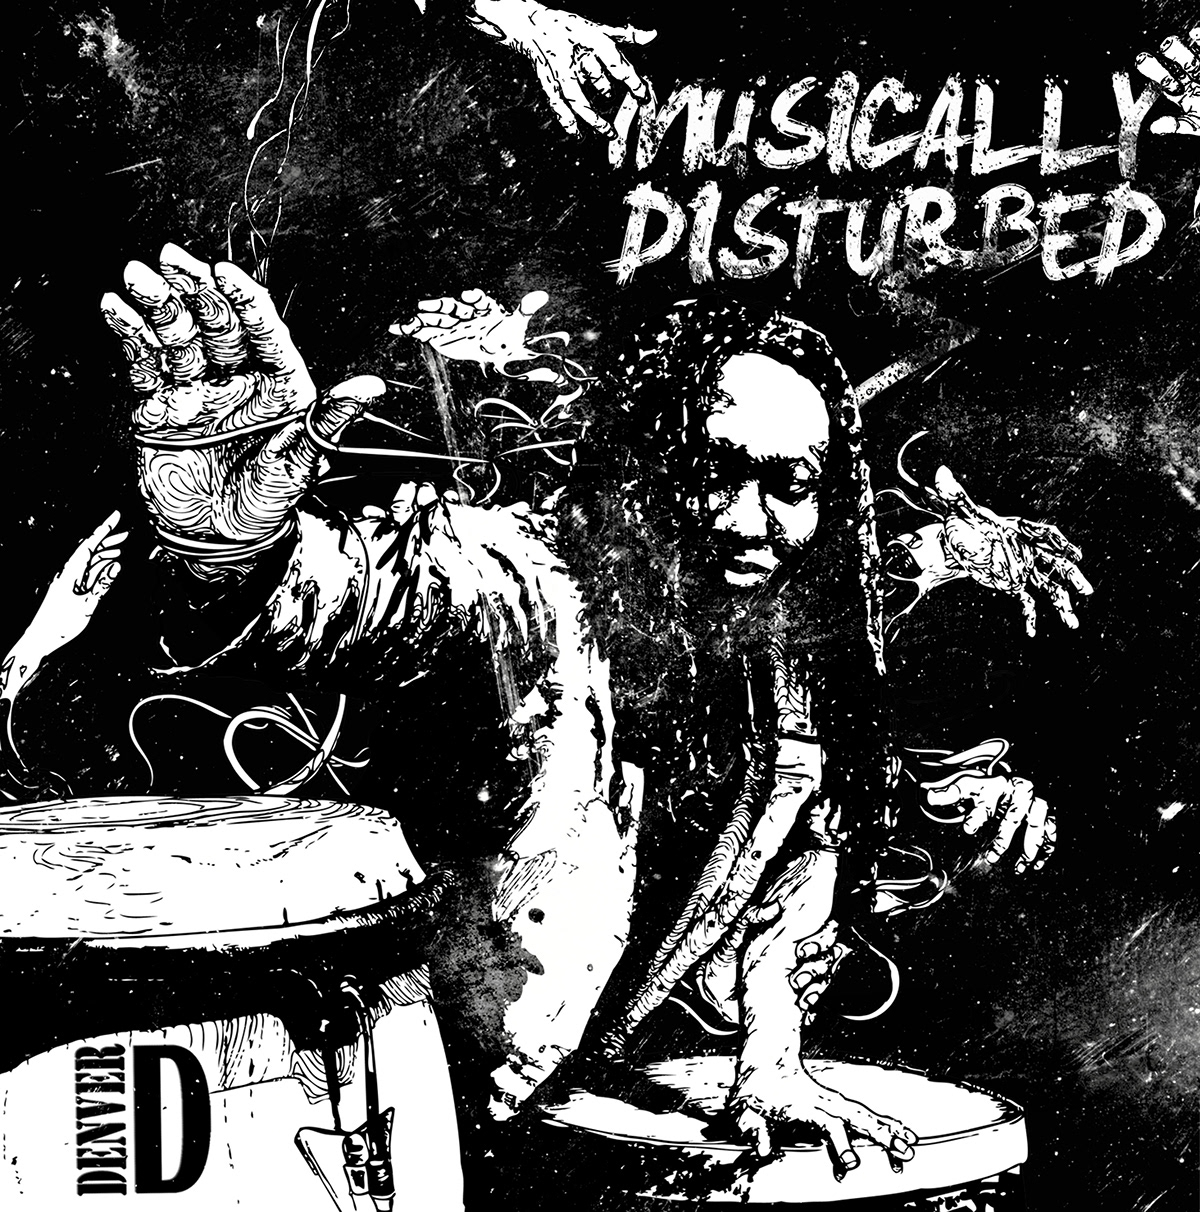 Album cover reggae drums alternative black and white grunge horror